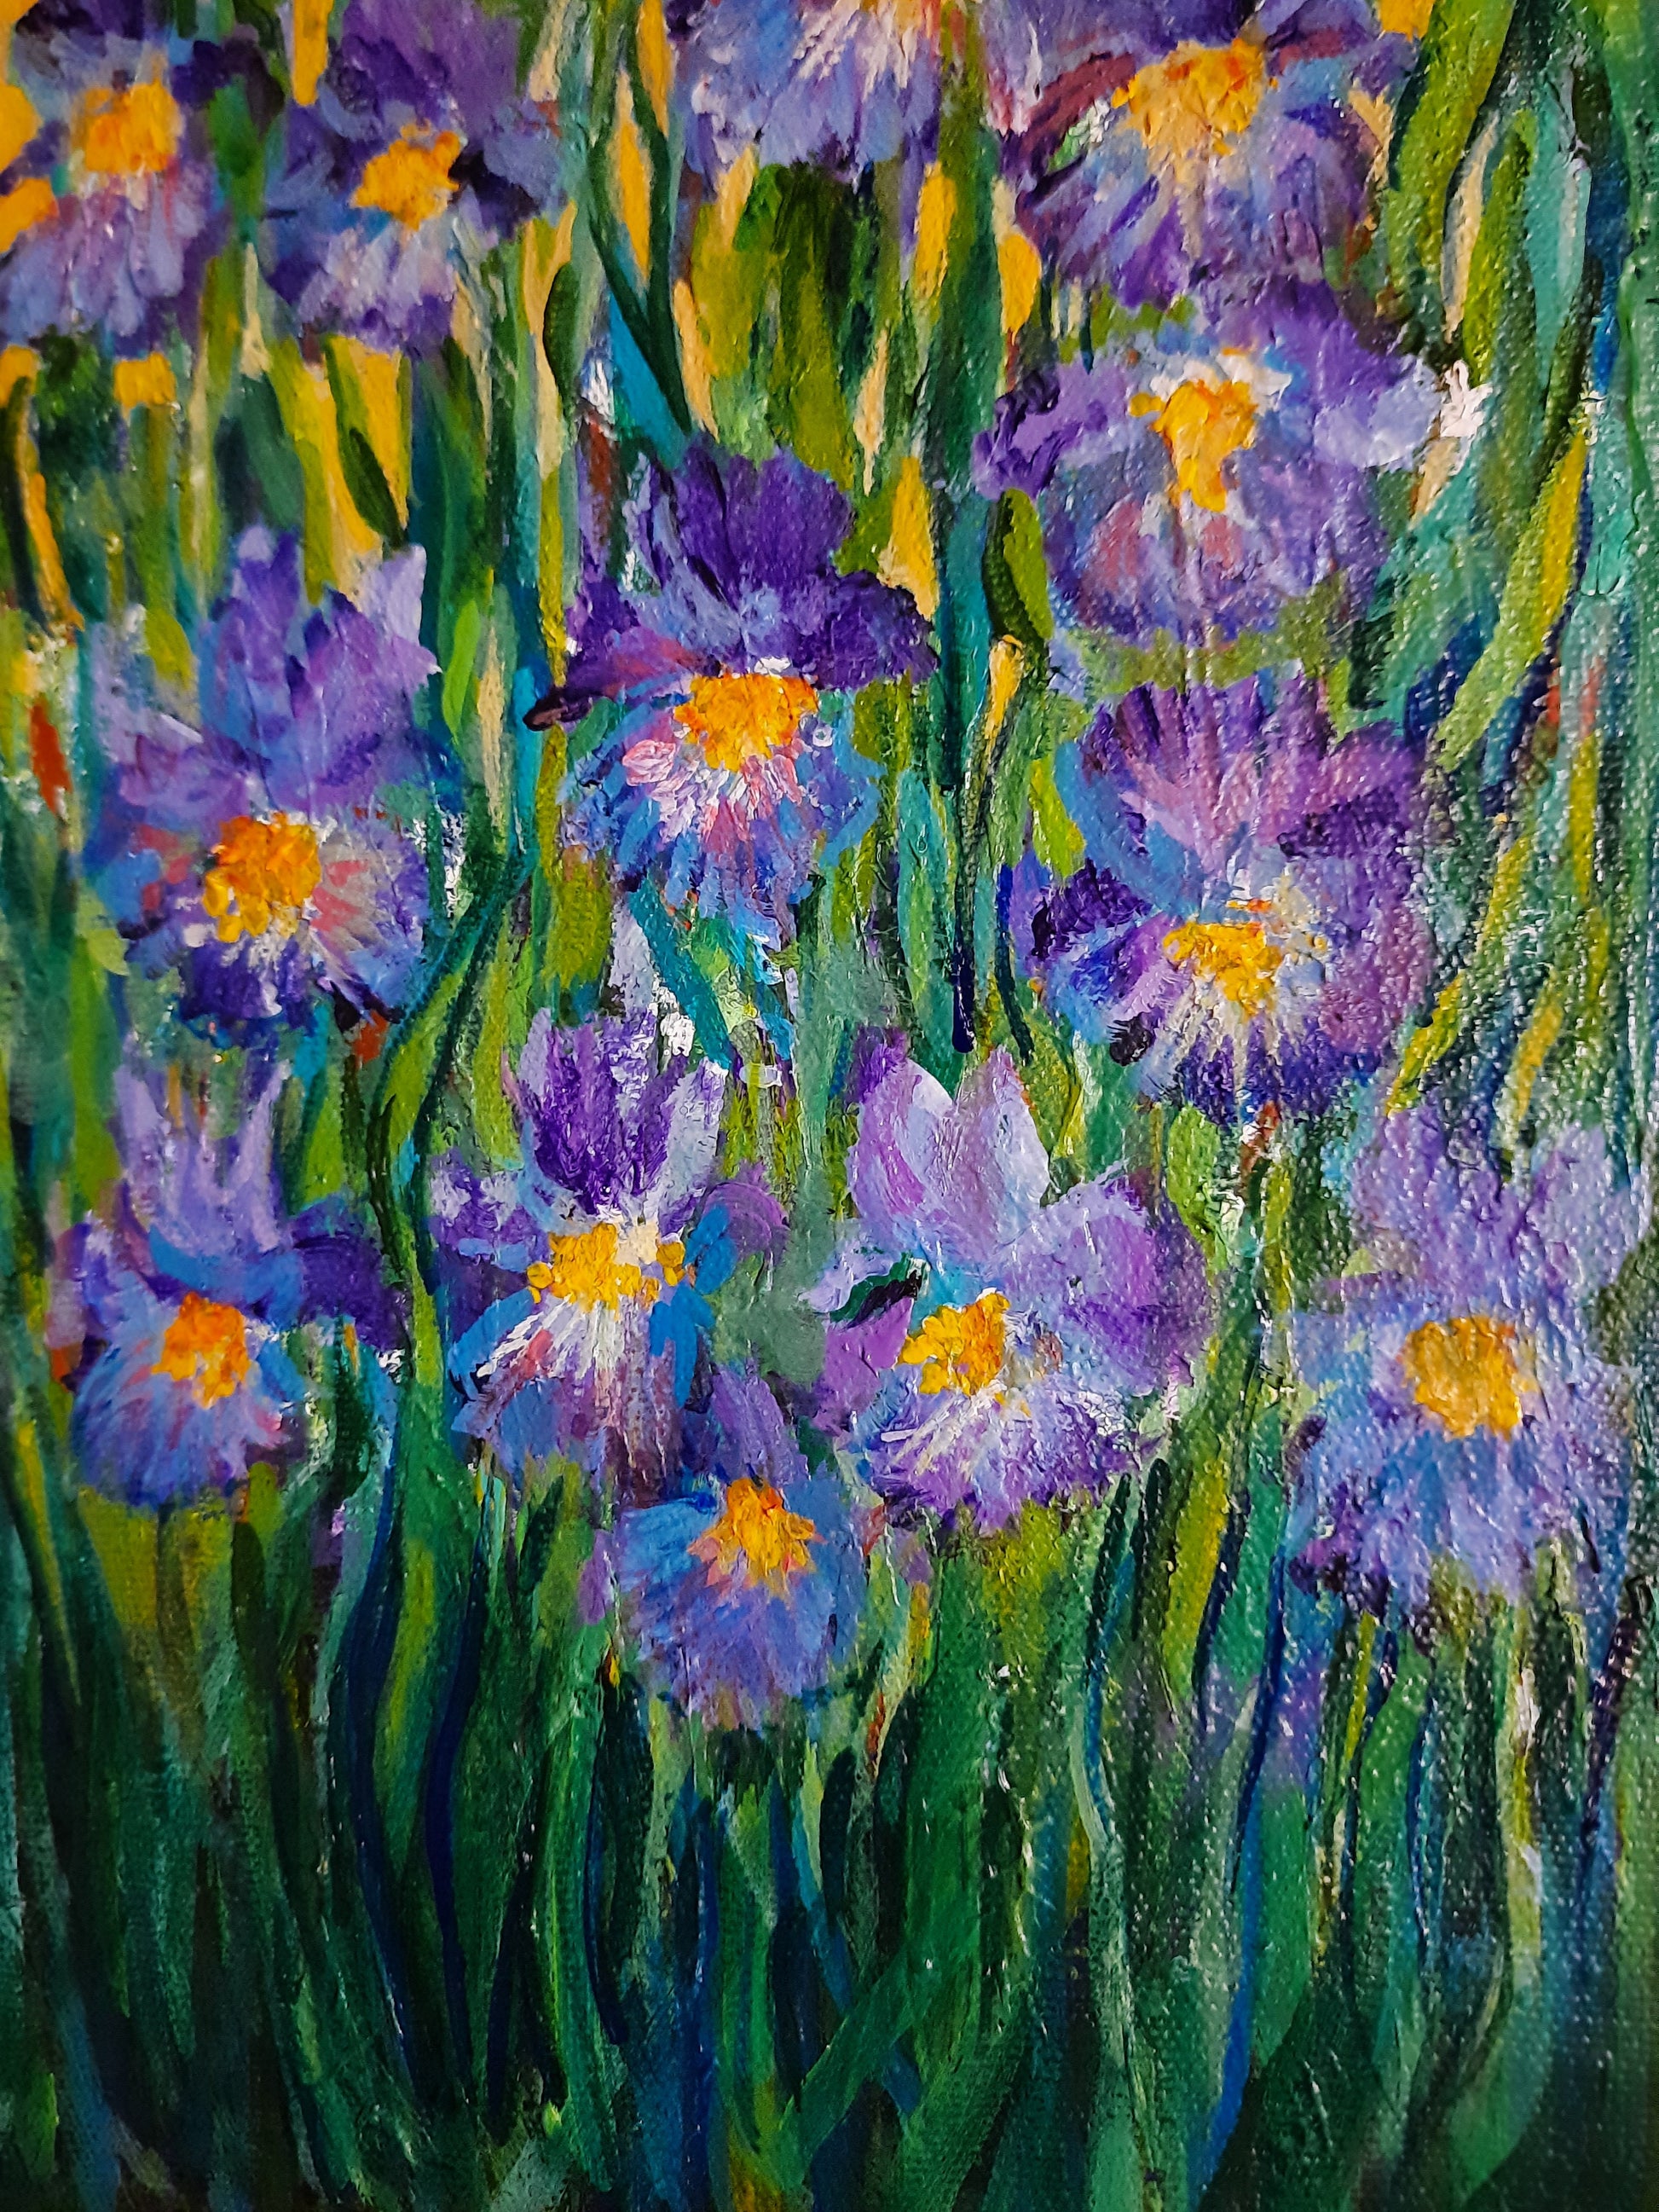 A closeup of Garden iris flowers, acrylic painting on canvas panel